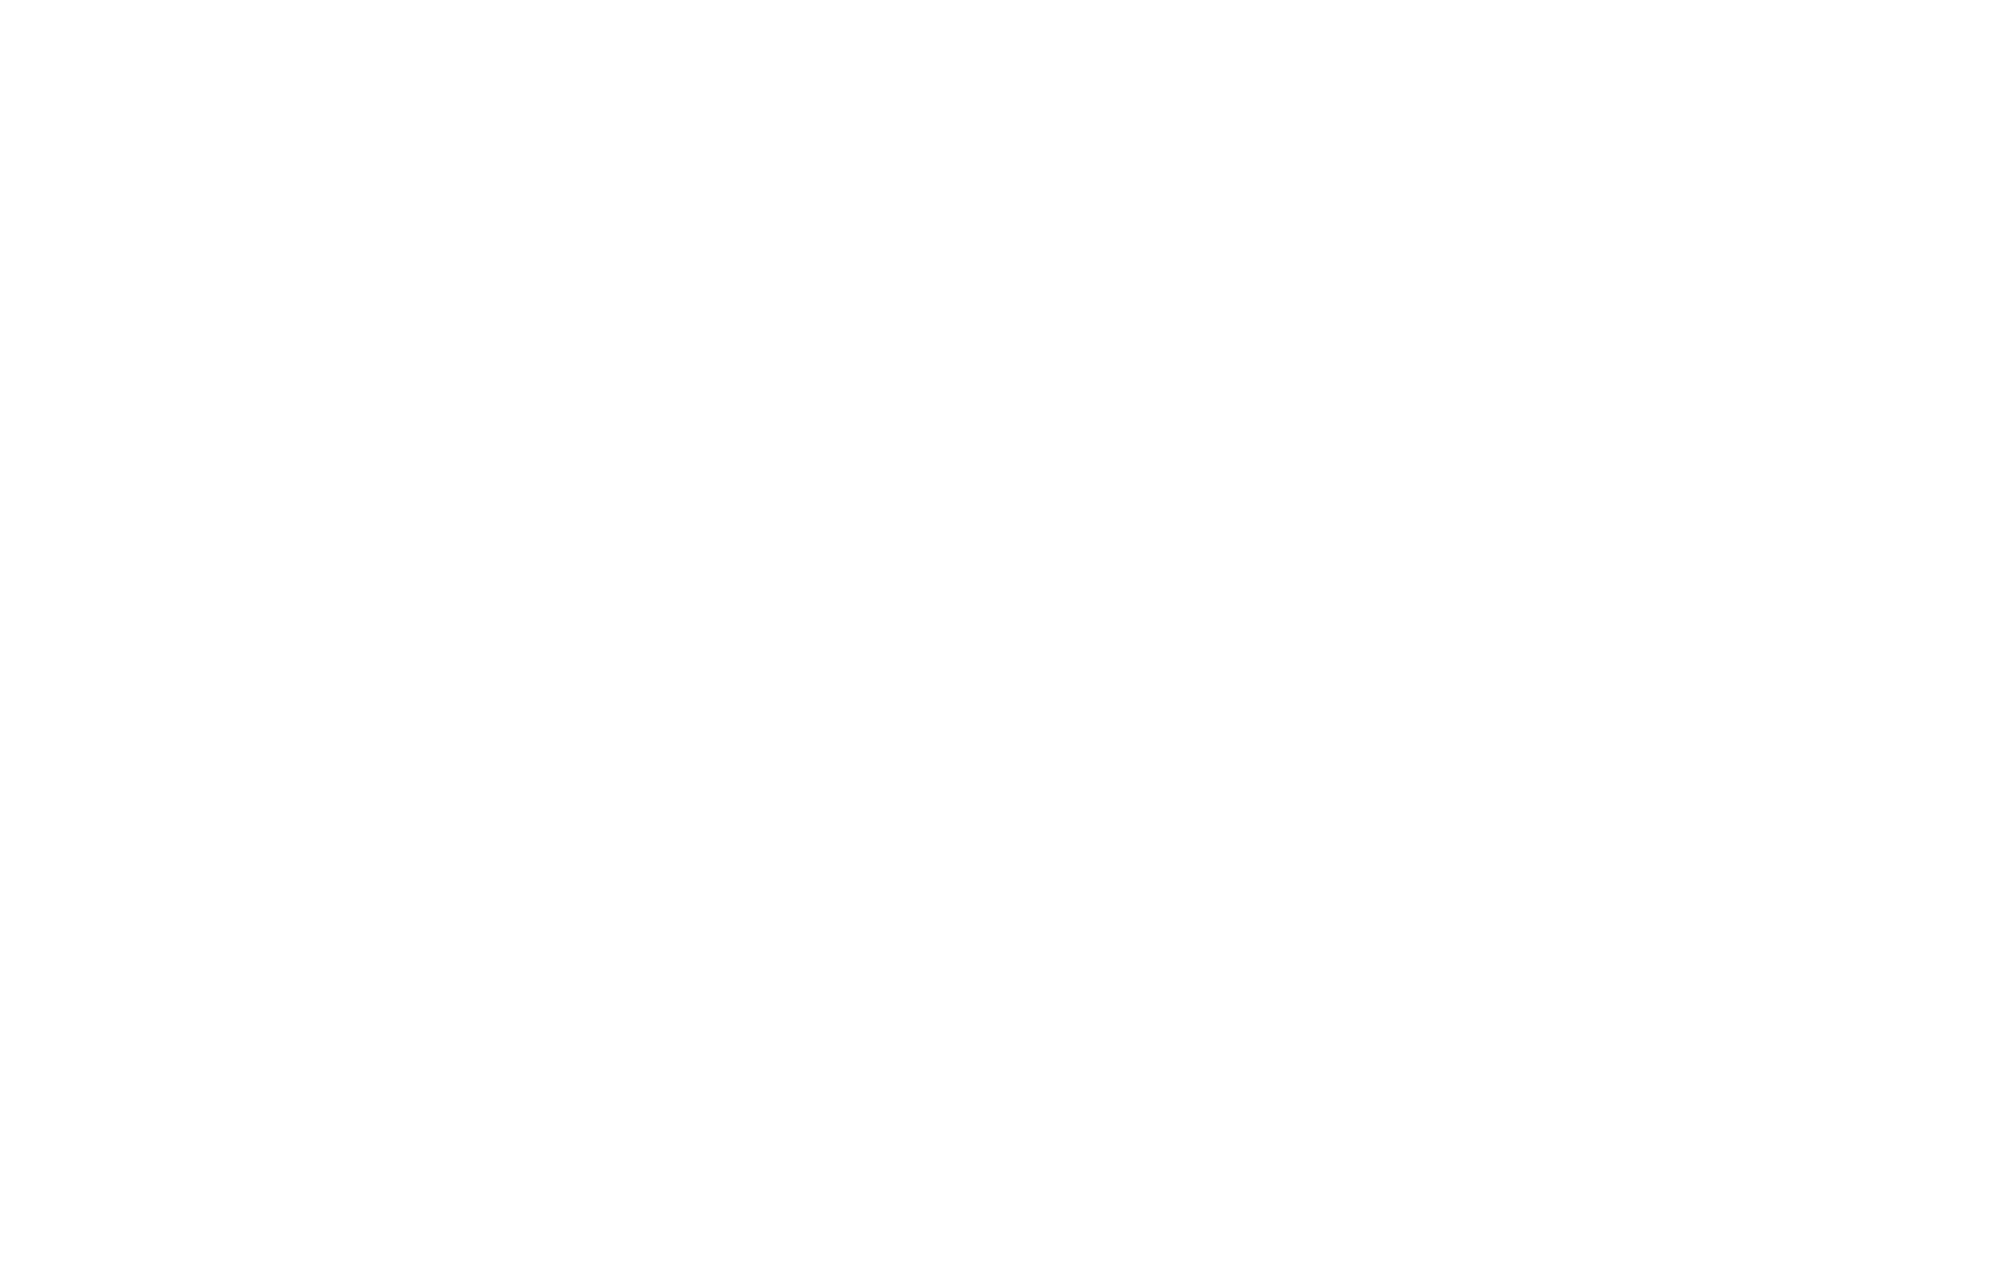 ANDIN JSC